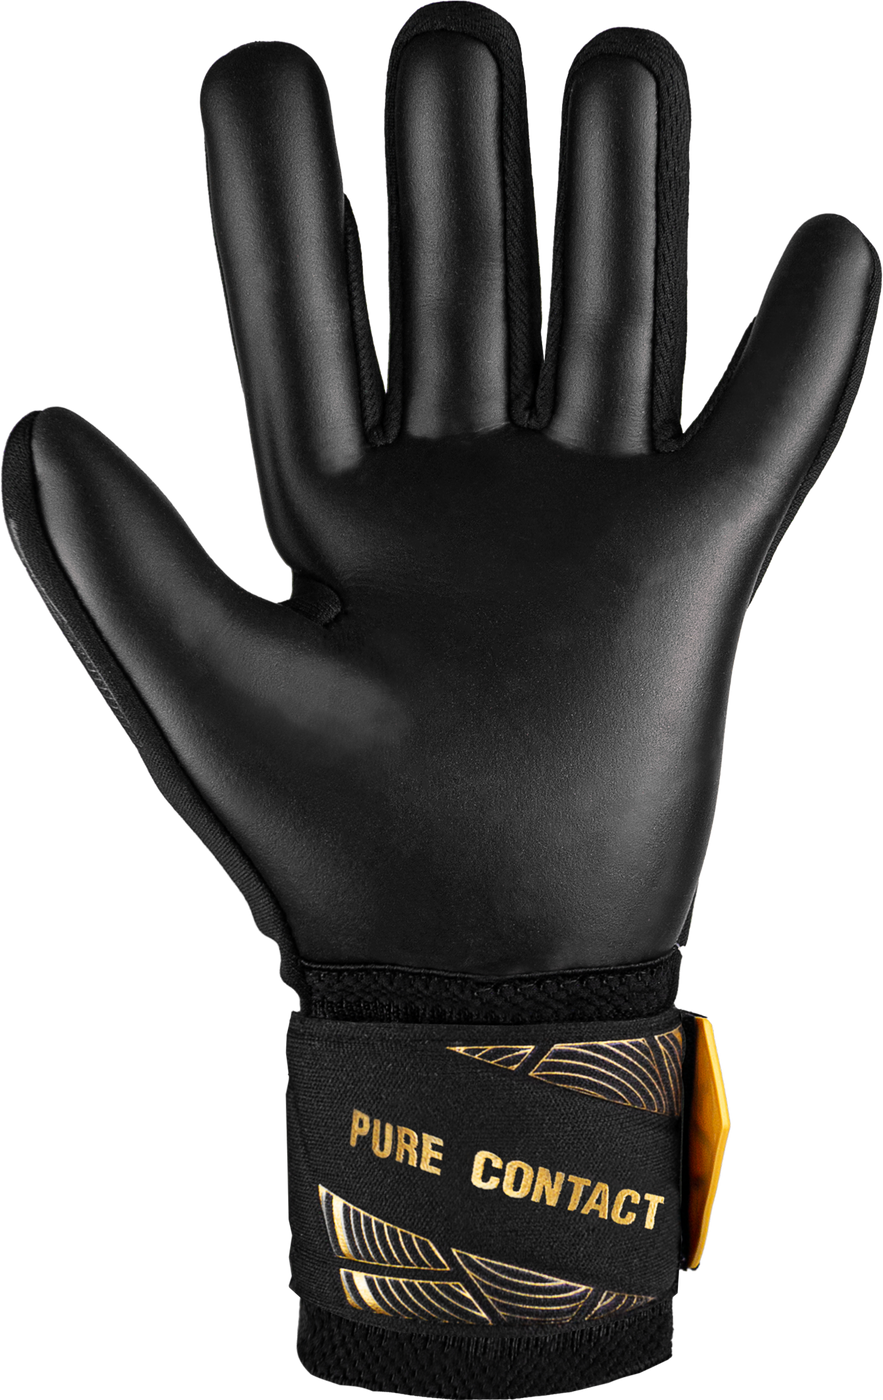 Воротарські рукавиці Reusch Pure Contact Infinity Junior купити